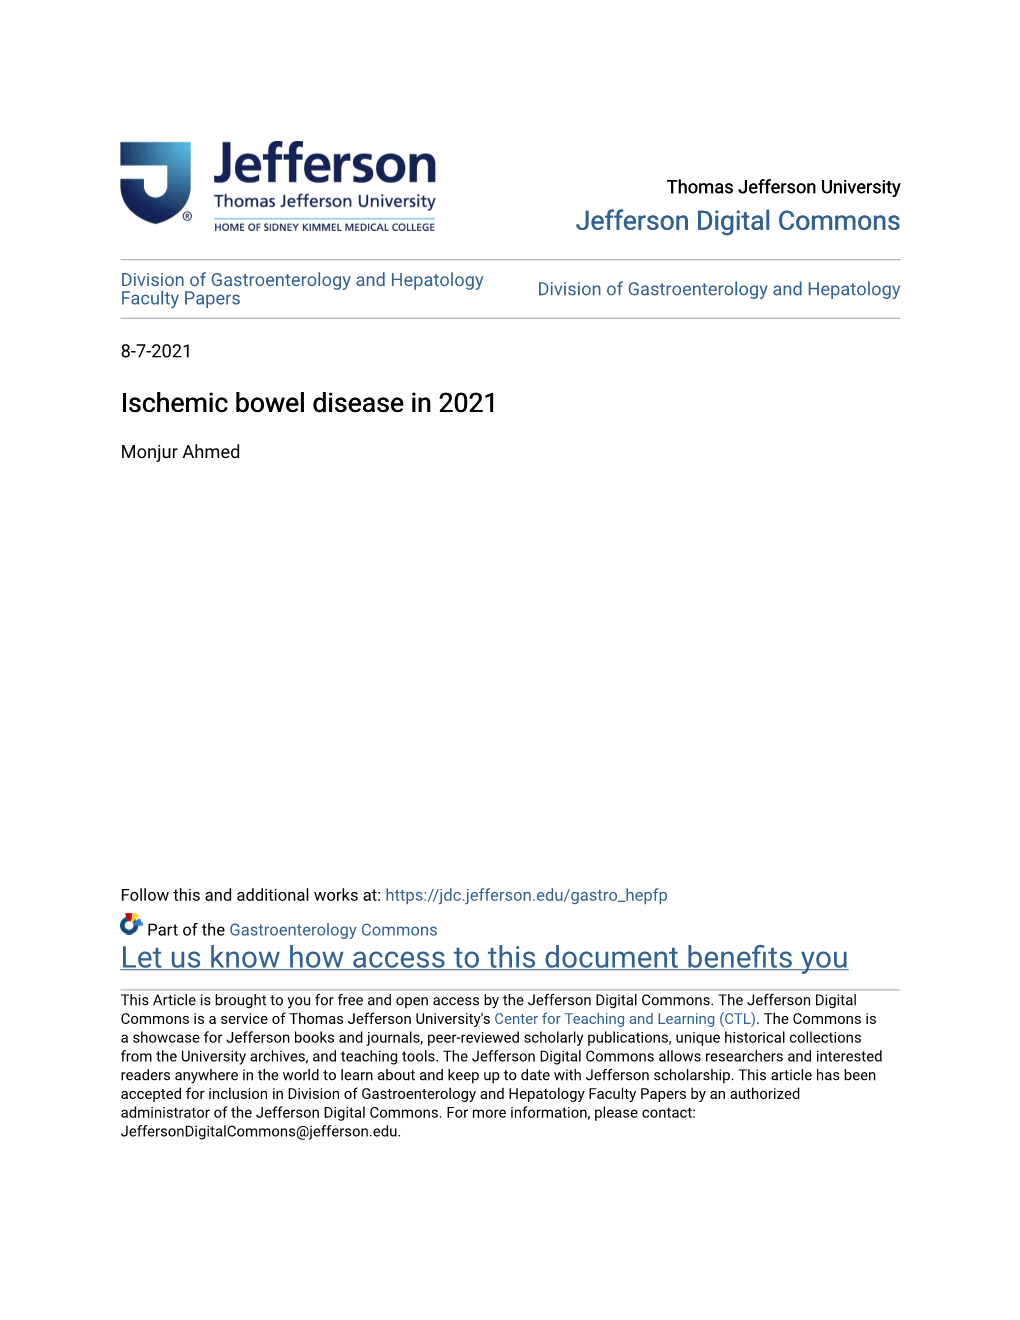 Ischemic Bowel Disease in 2021